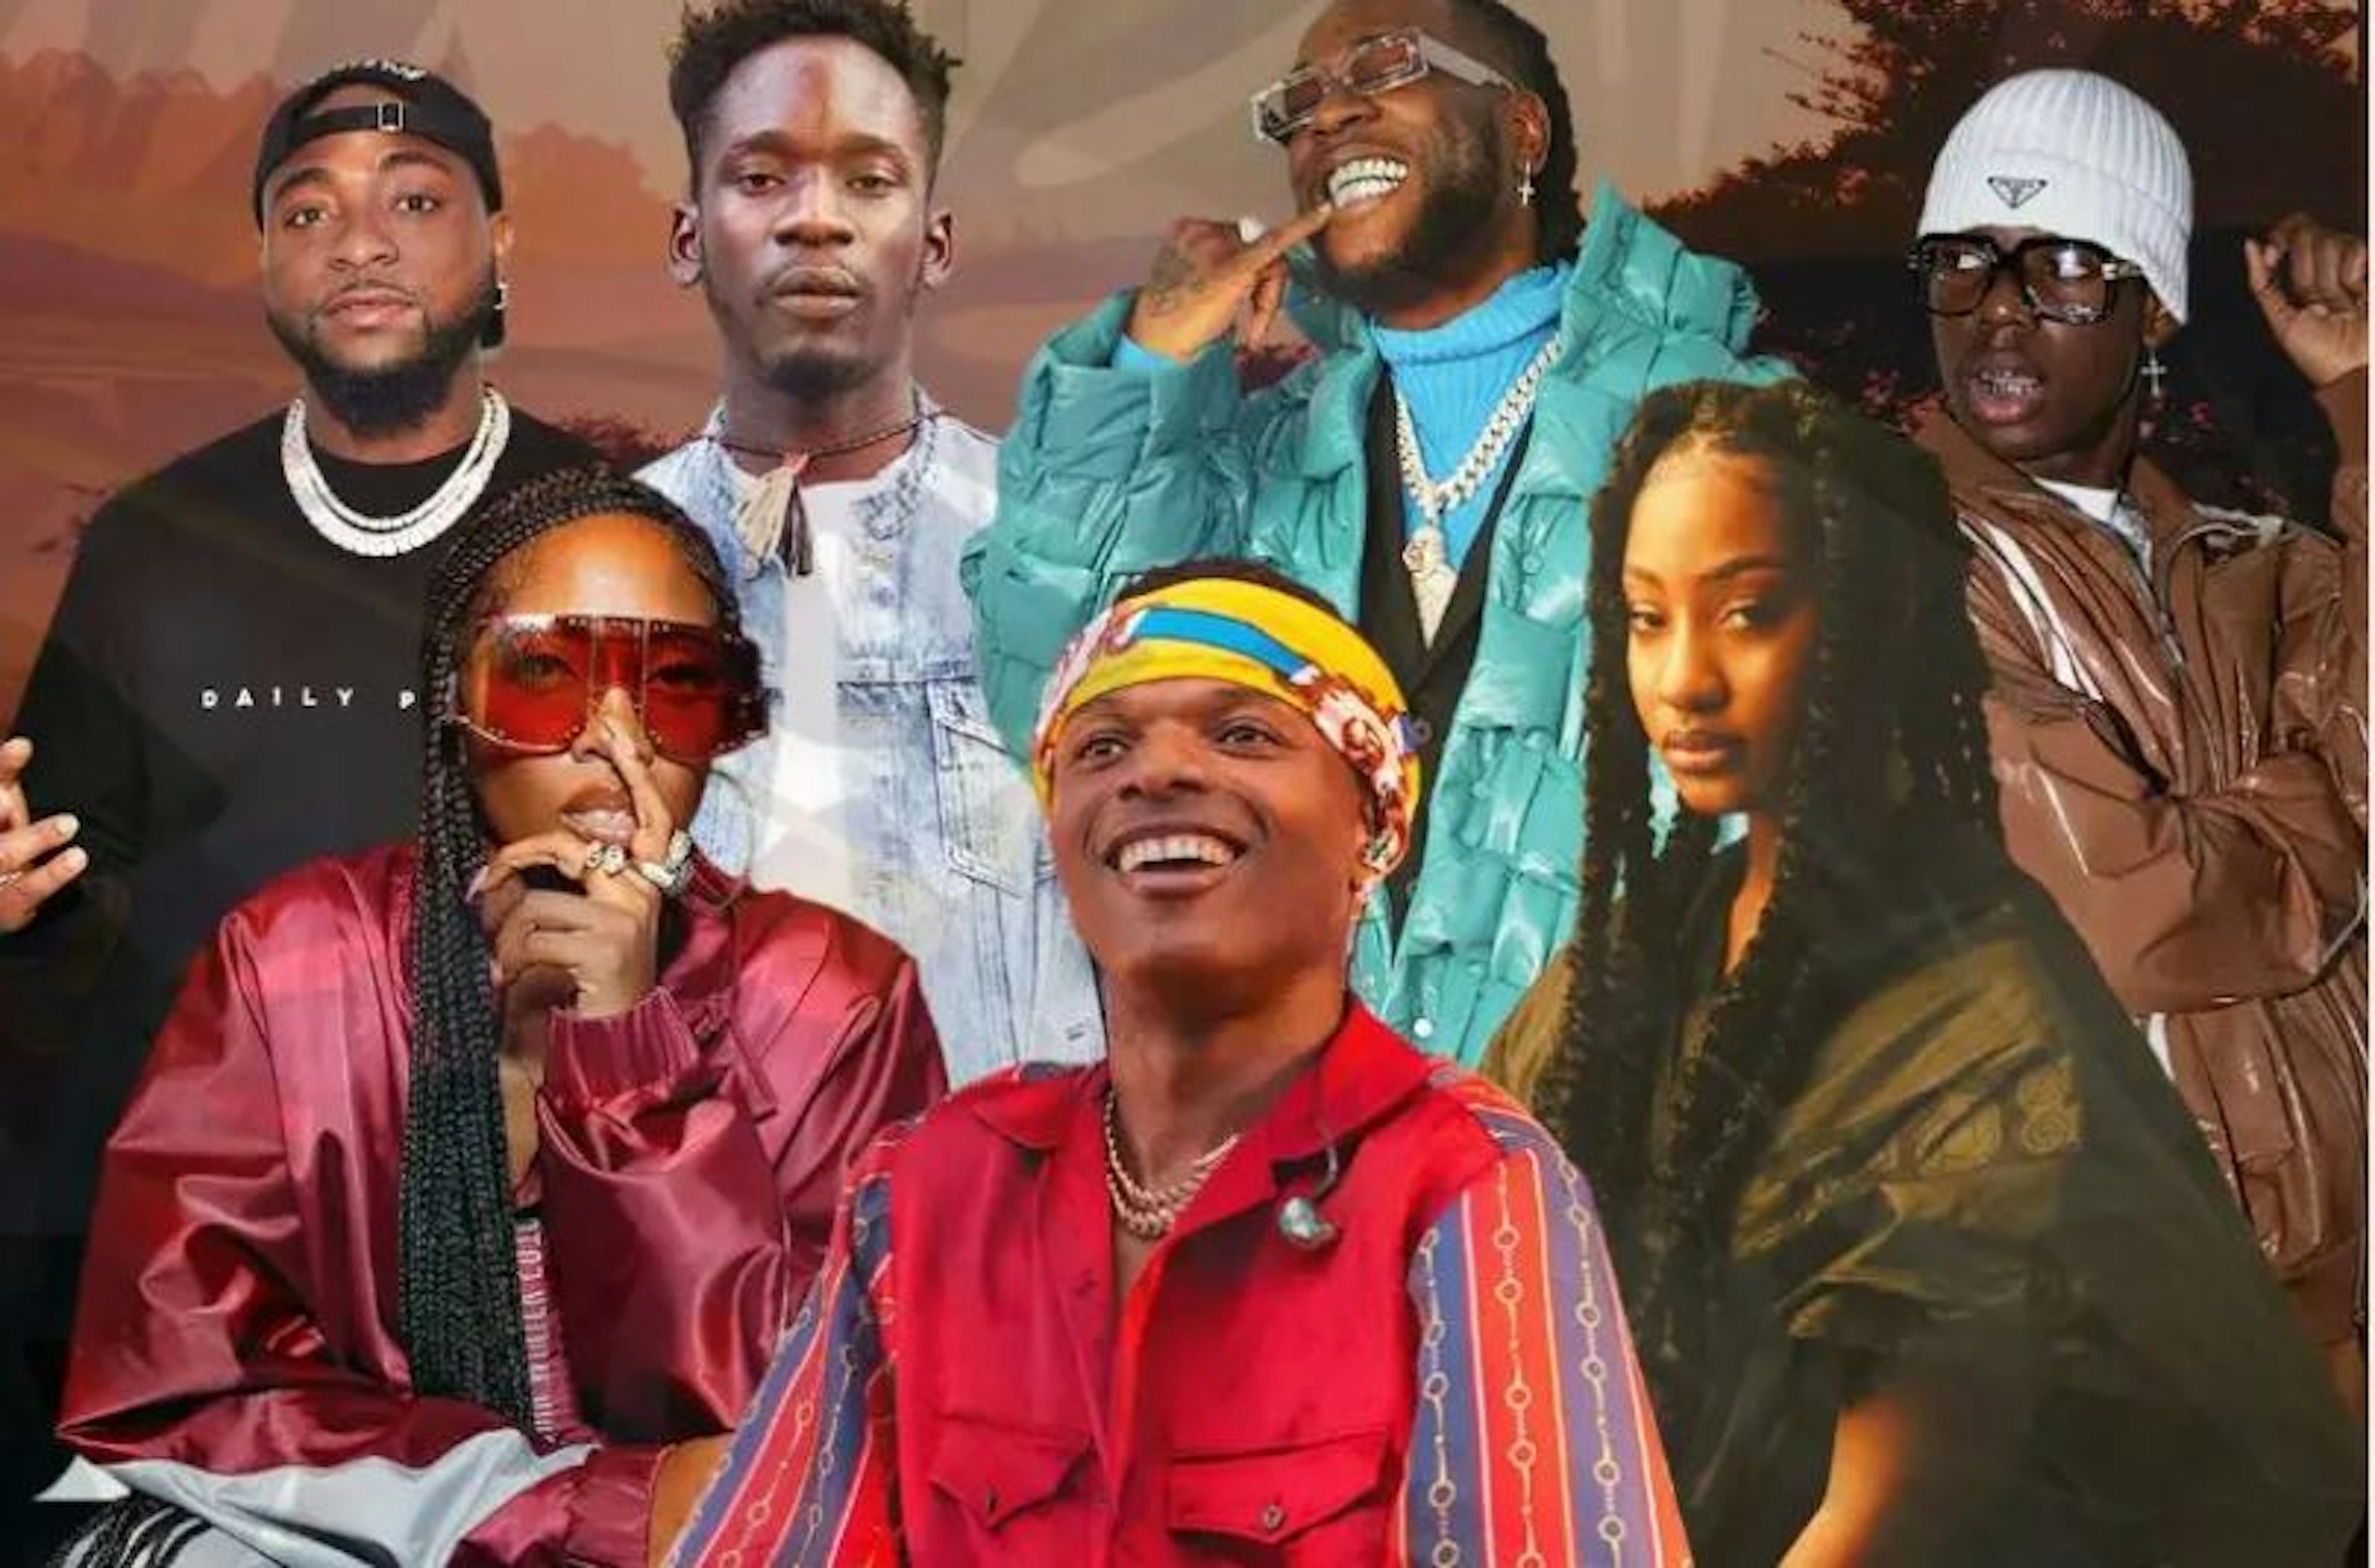 Rivalries Heat Up in Nigerian Afrobeats Scene, Impacting Industry Harmony